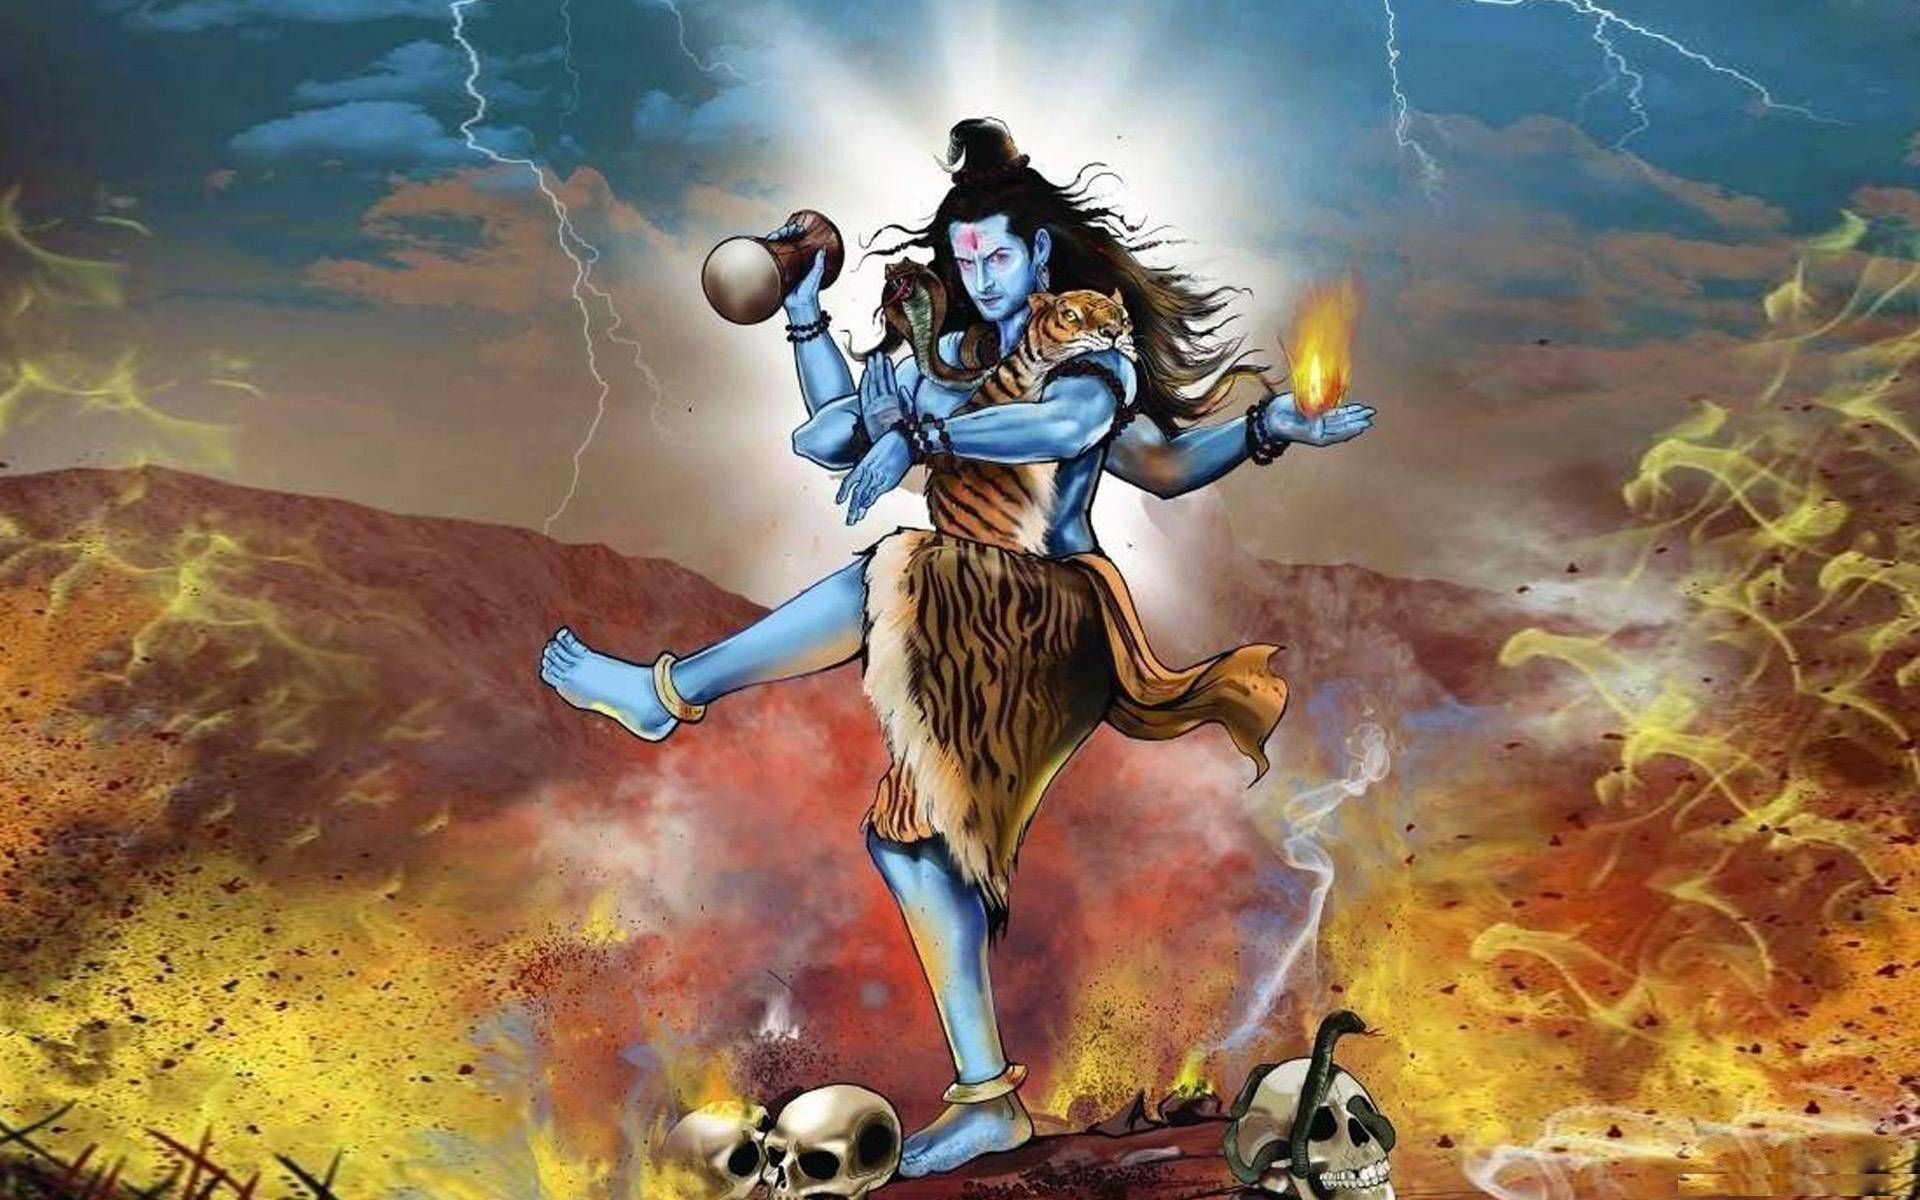 beautiful images of lord shiva tandav